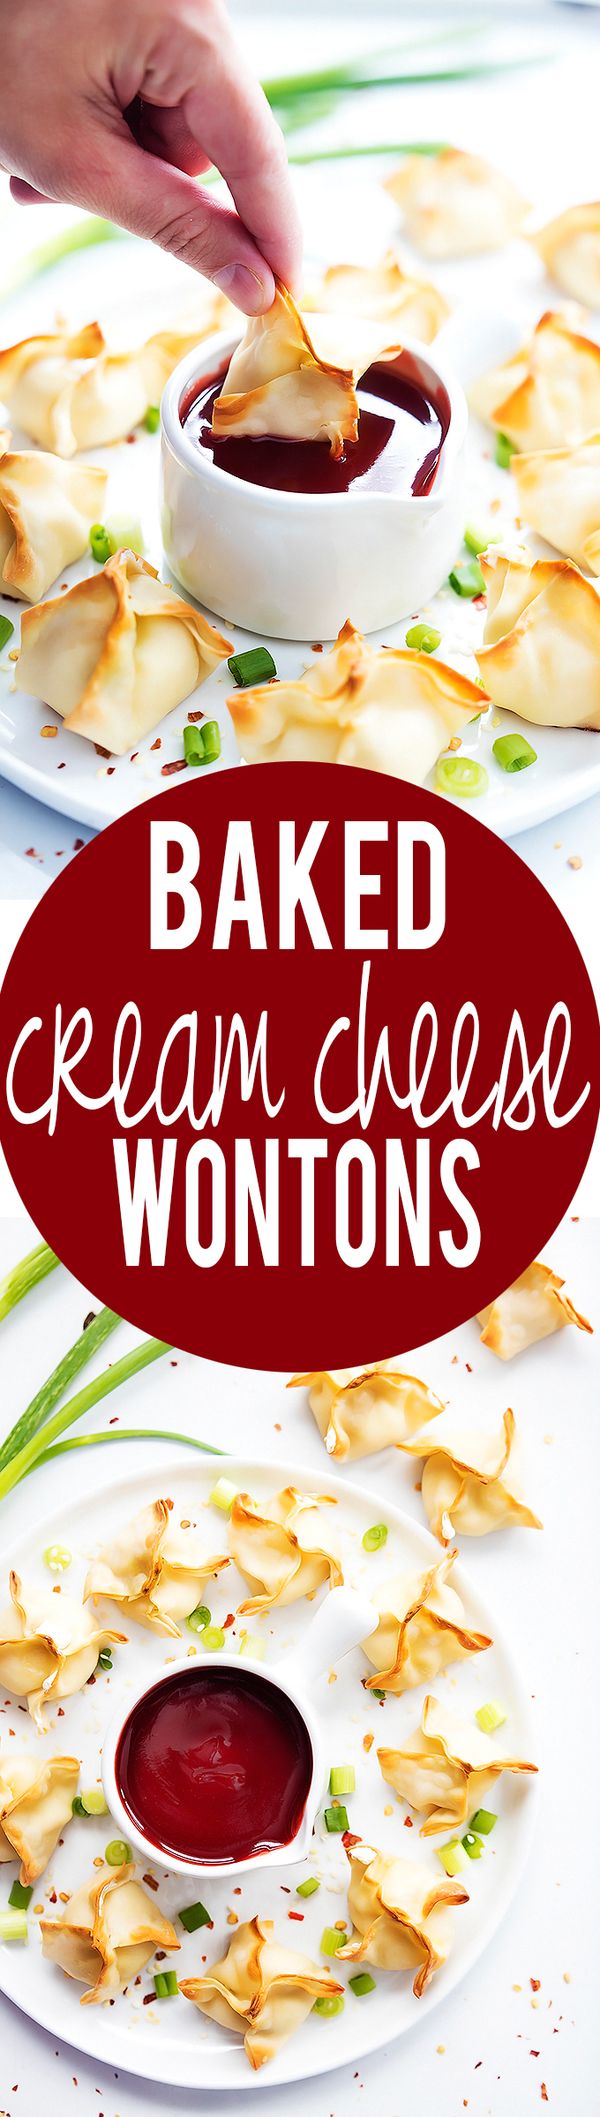 Baked Cream Cheese Wontons (A.K.A. cream cheese rangoon